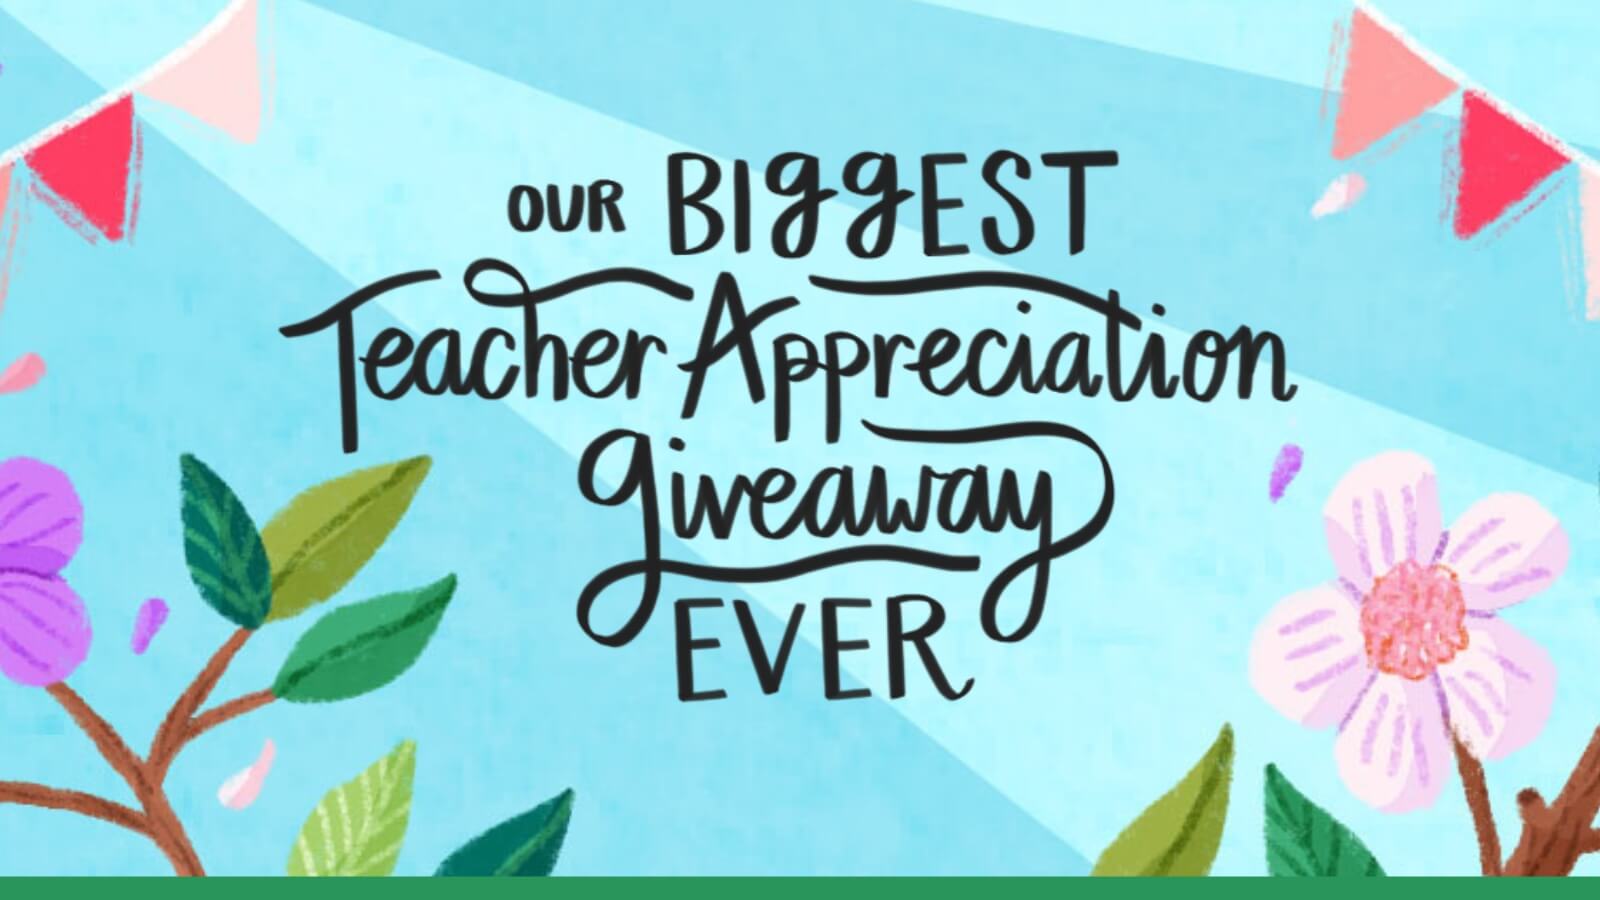 Our Biggest Teacher Appreciation Giveaway Ever